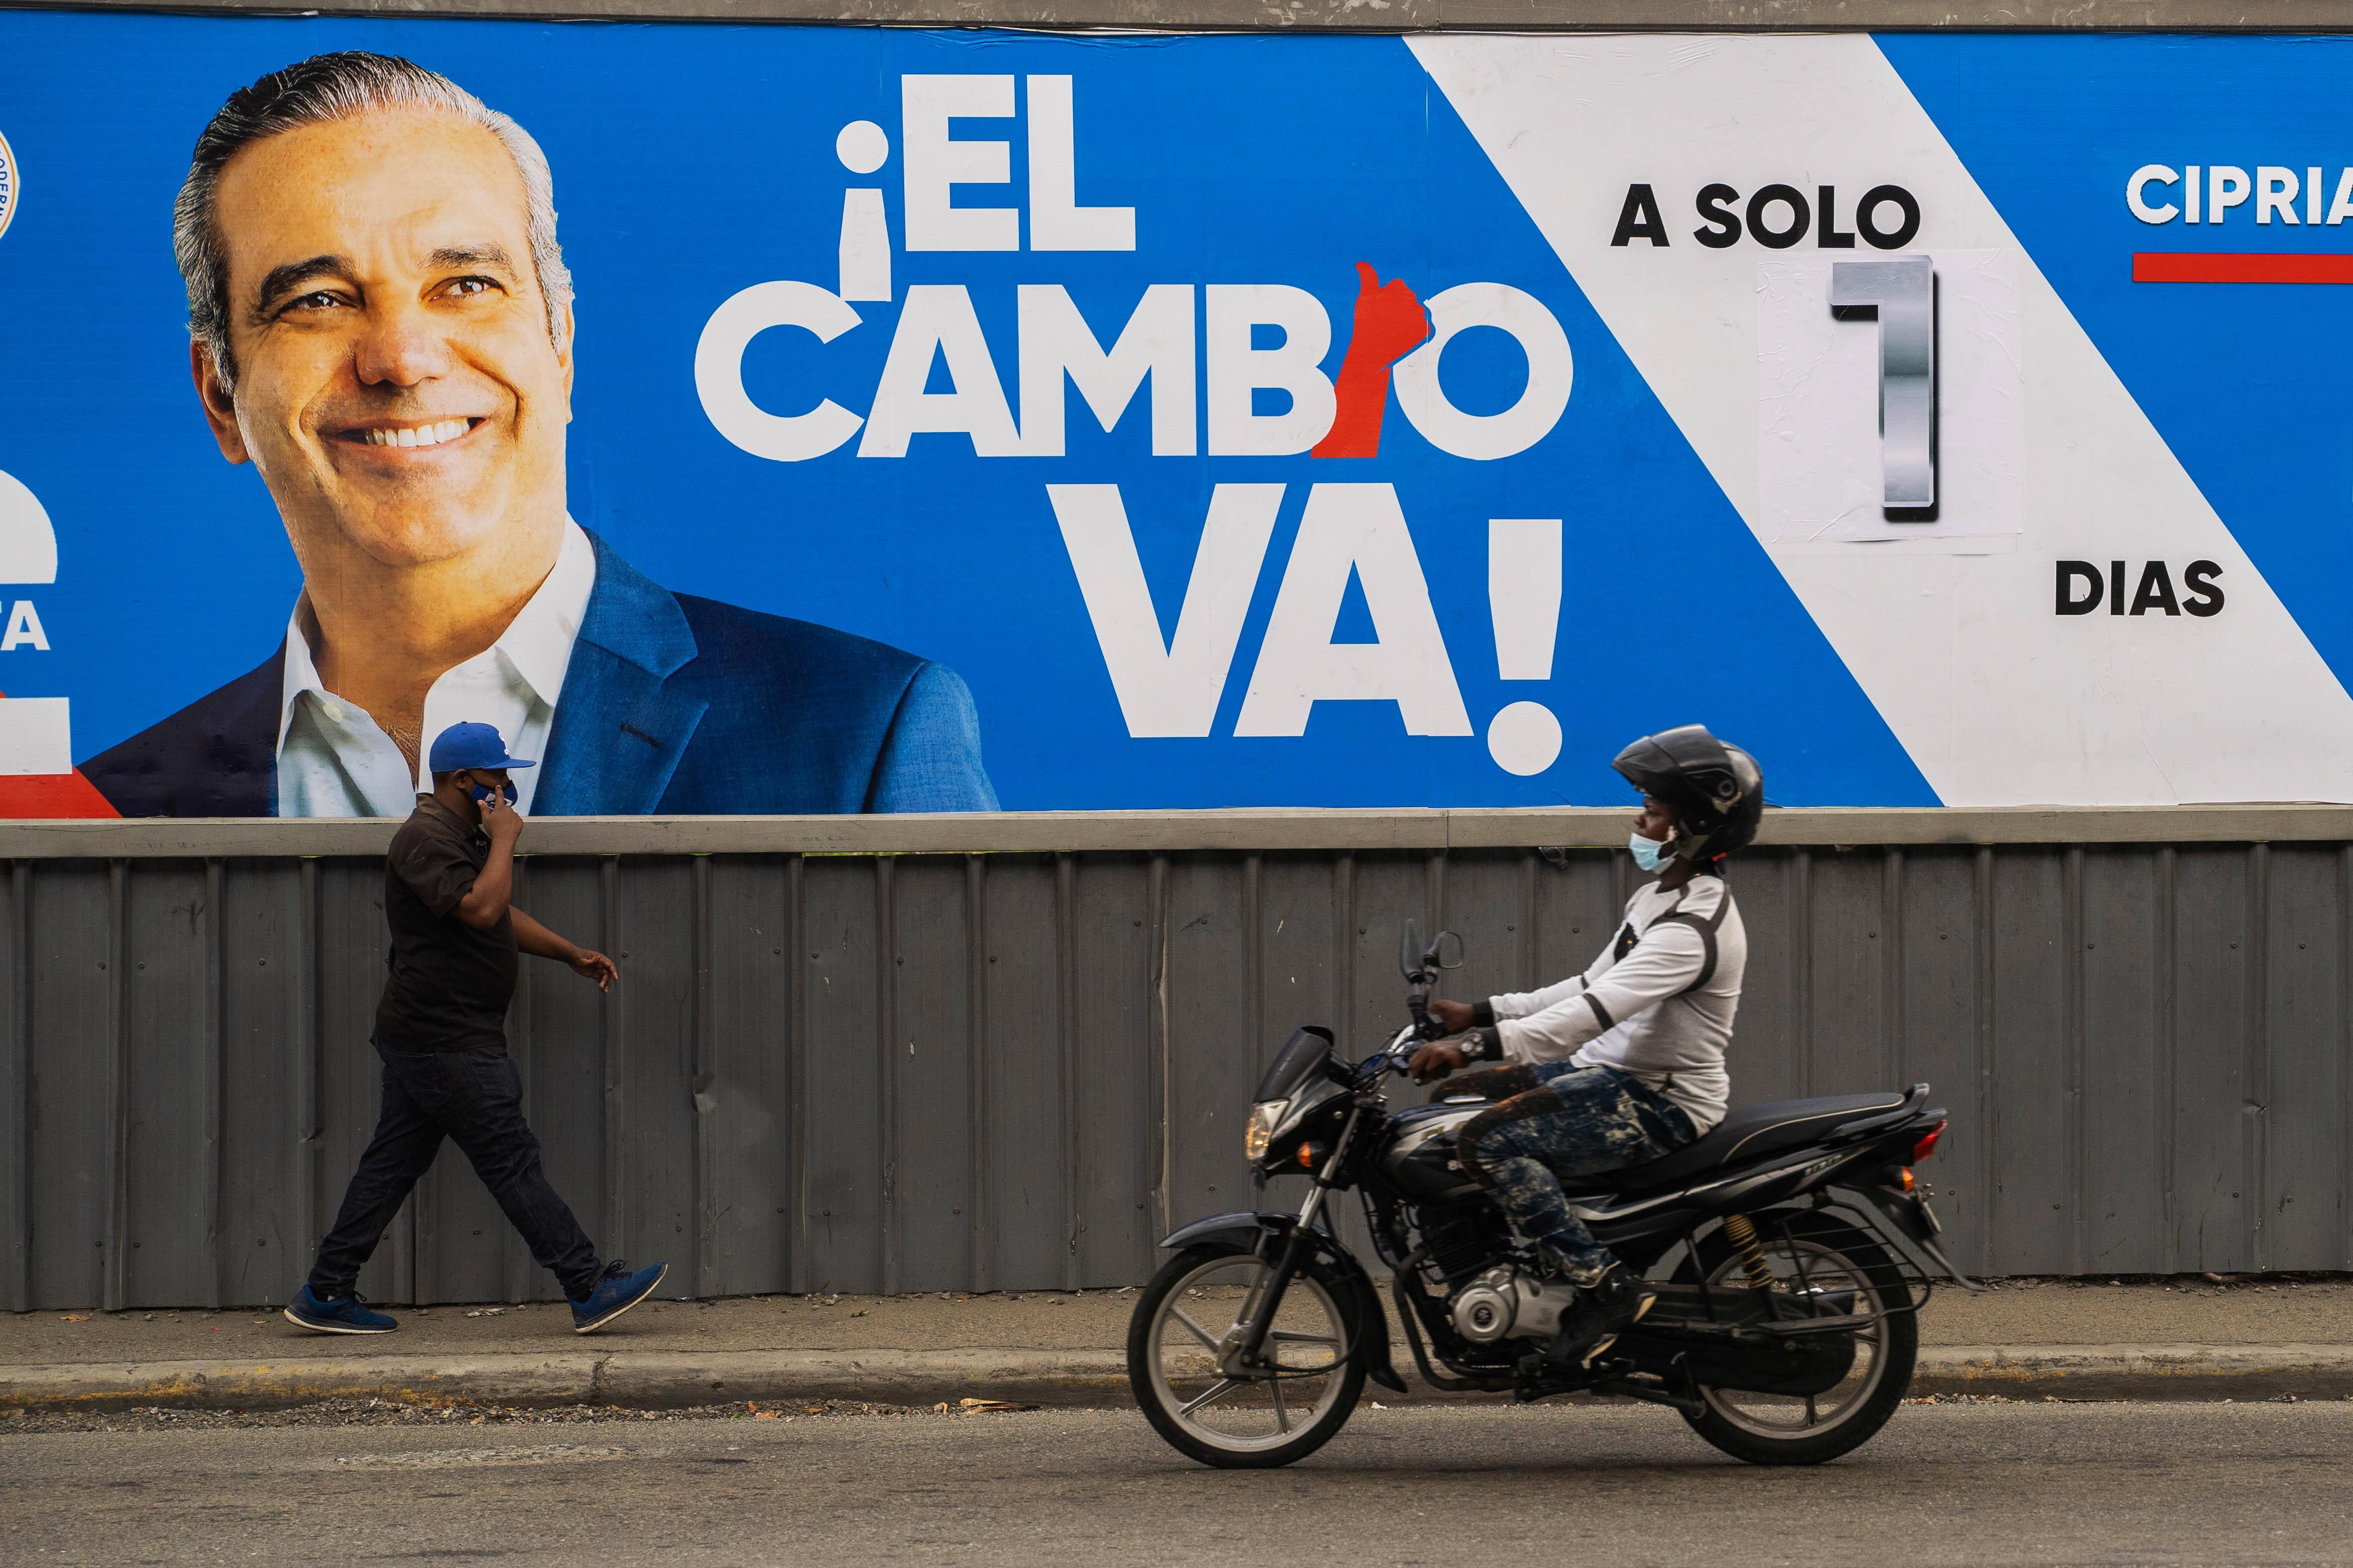 Mann vor Wahllokal in Dominikanischer Republik erschossen